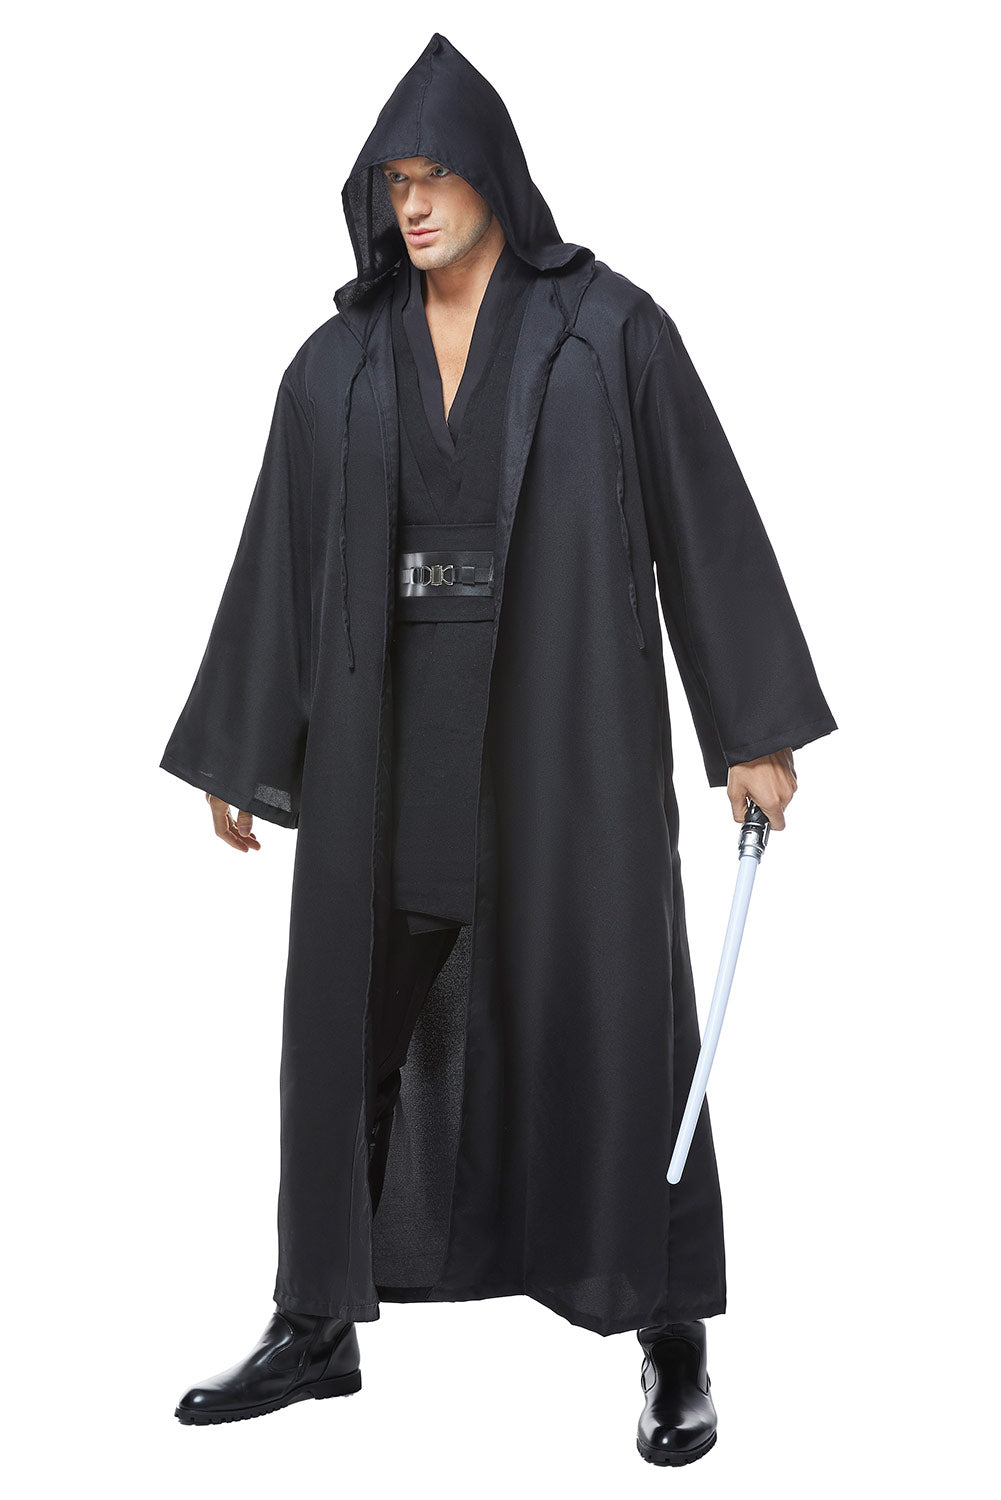 Star Wars Anakin Skywalker Cosplay Outfit Black Version